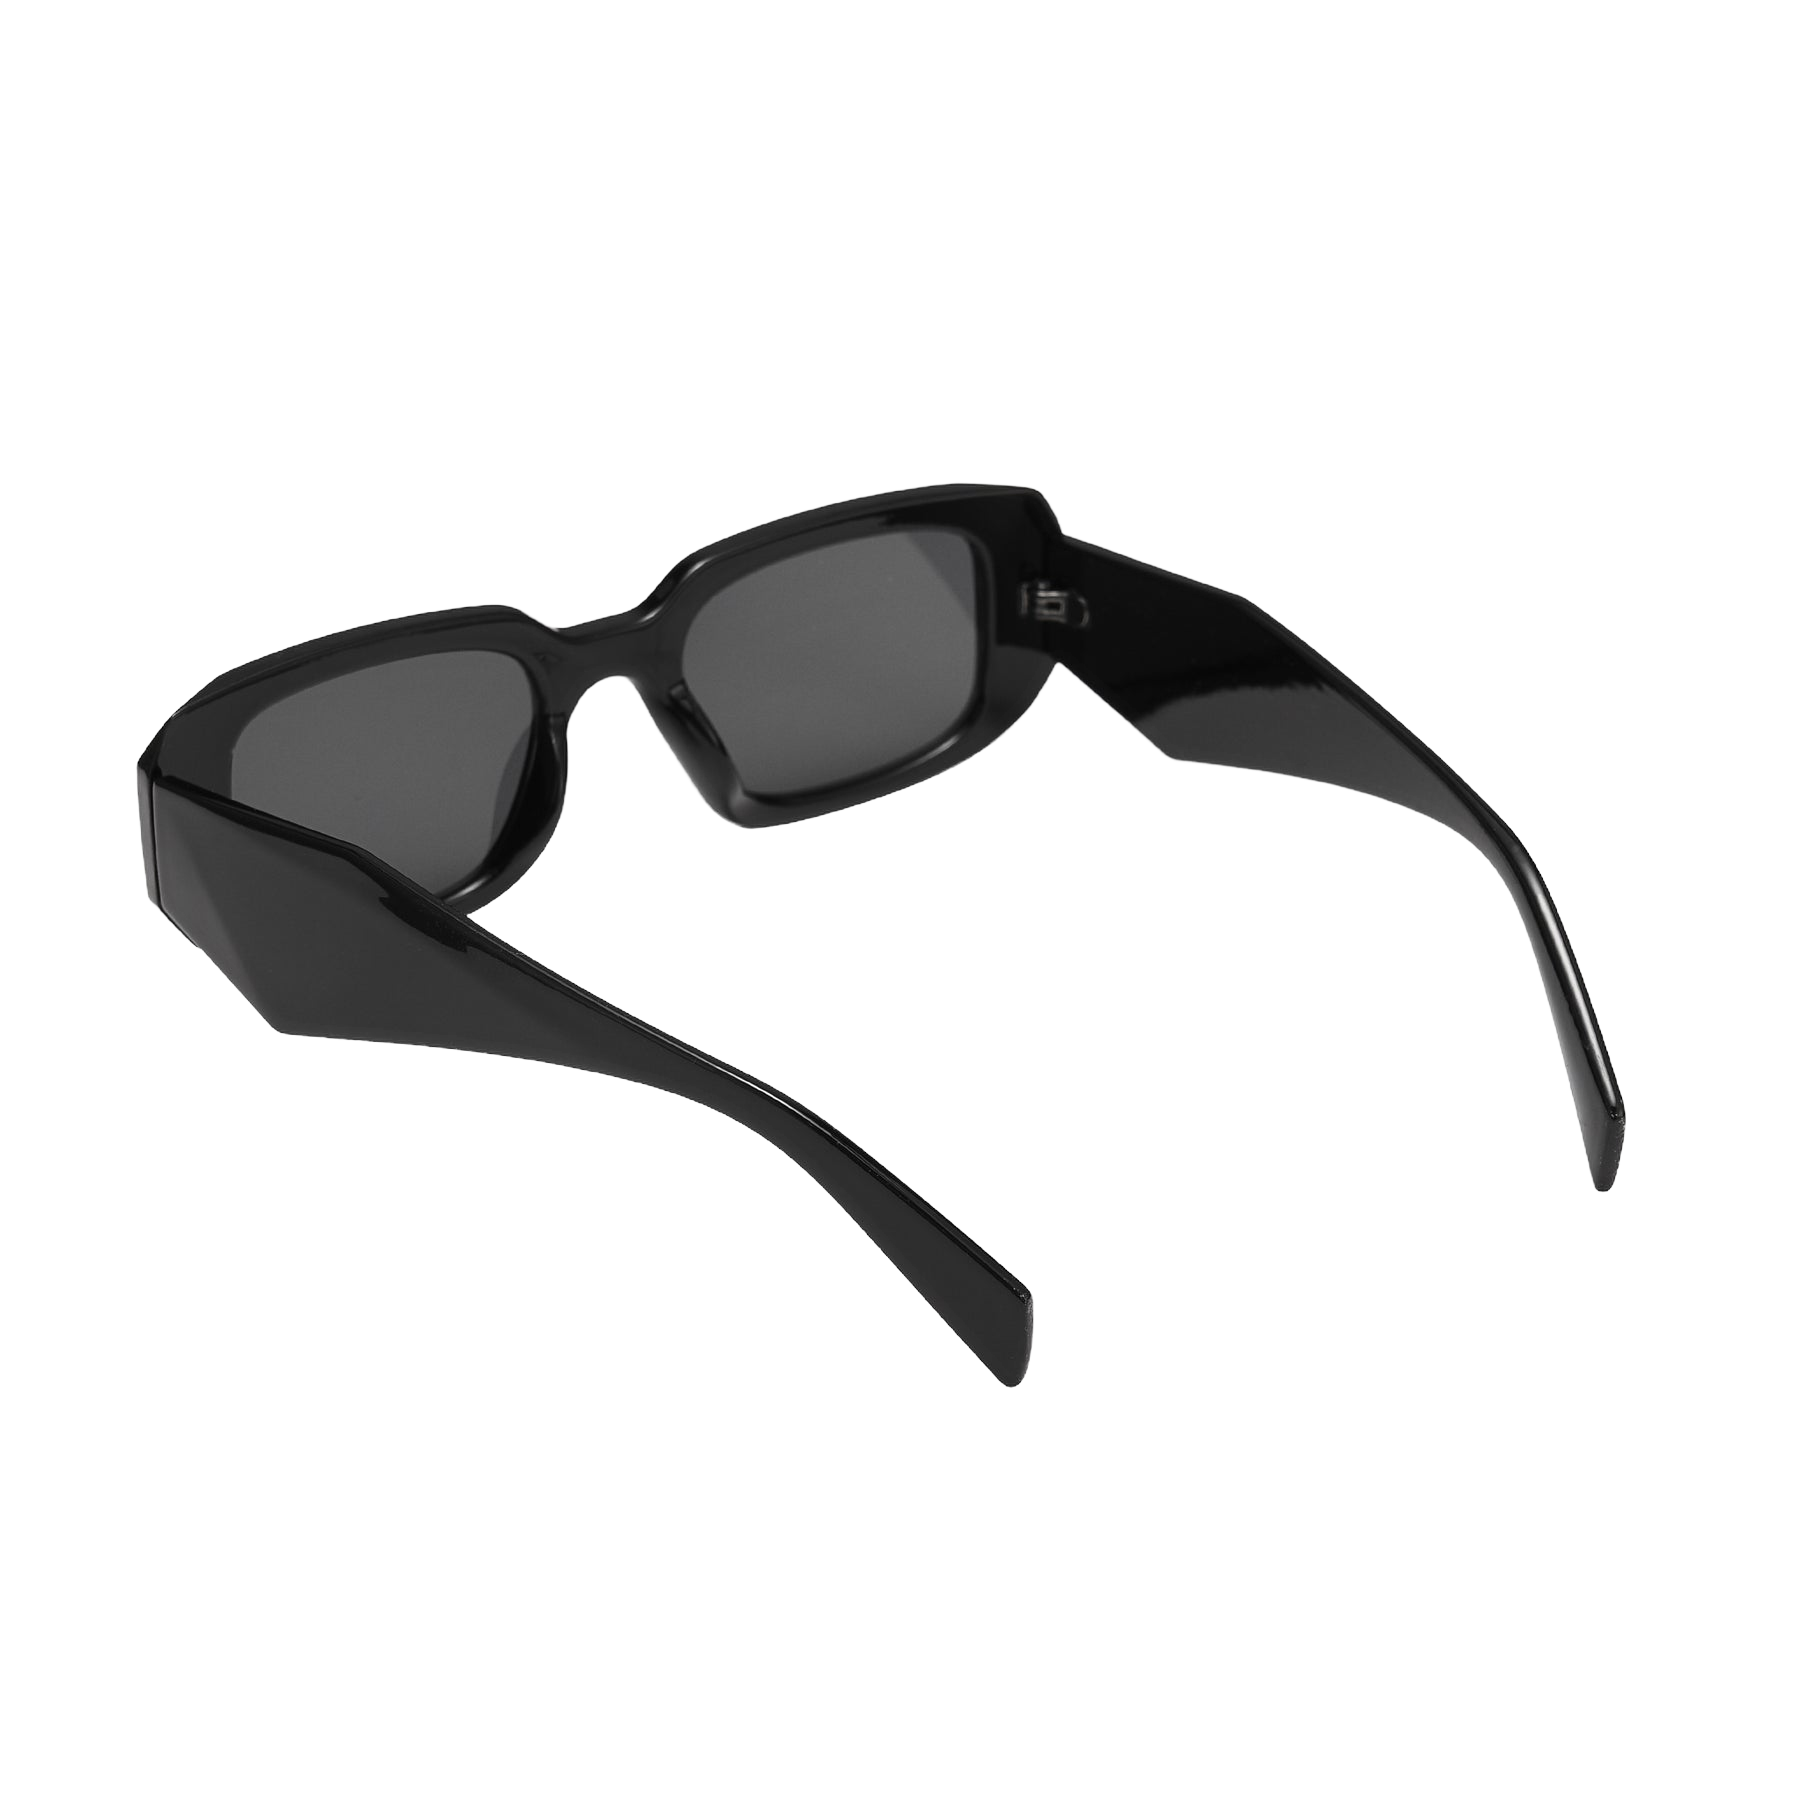 Monaco Sunglasses Black frame black lens festival outfit